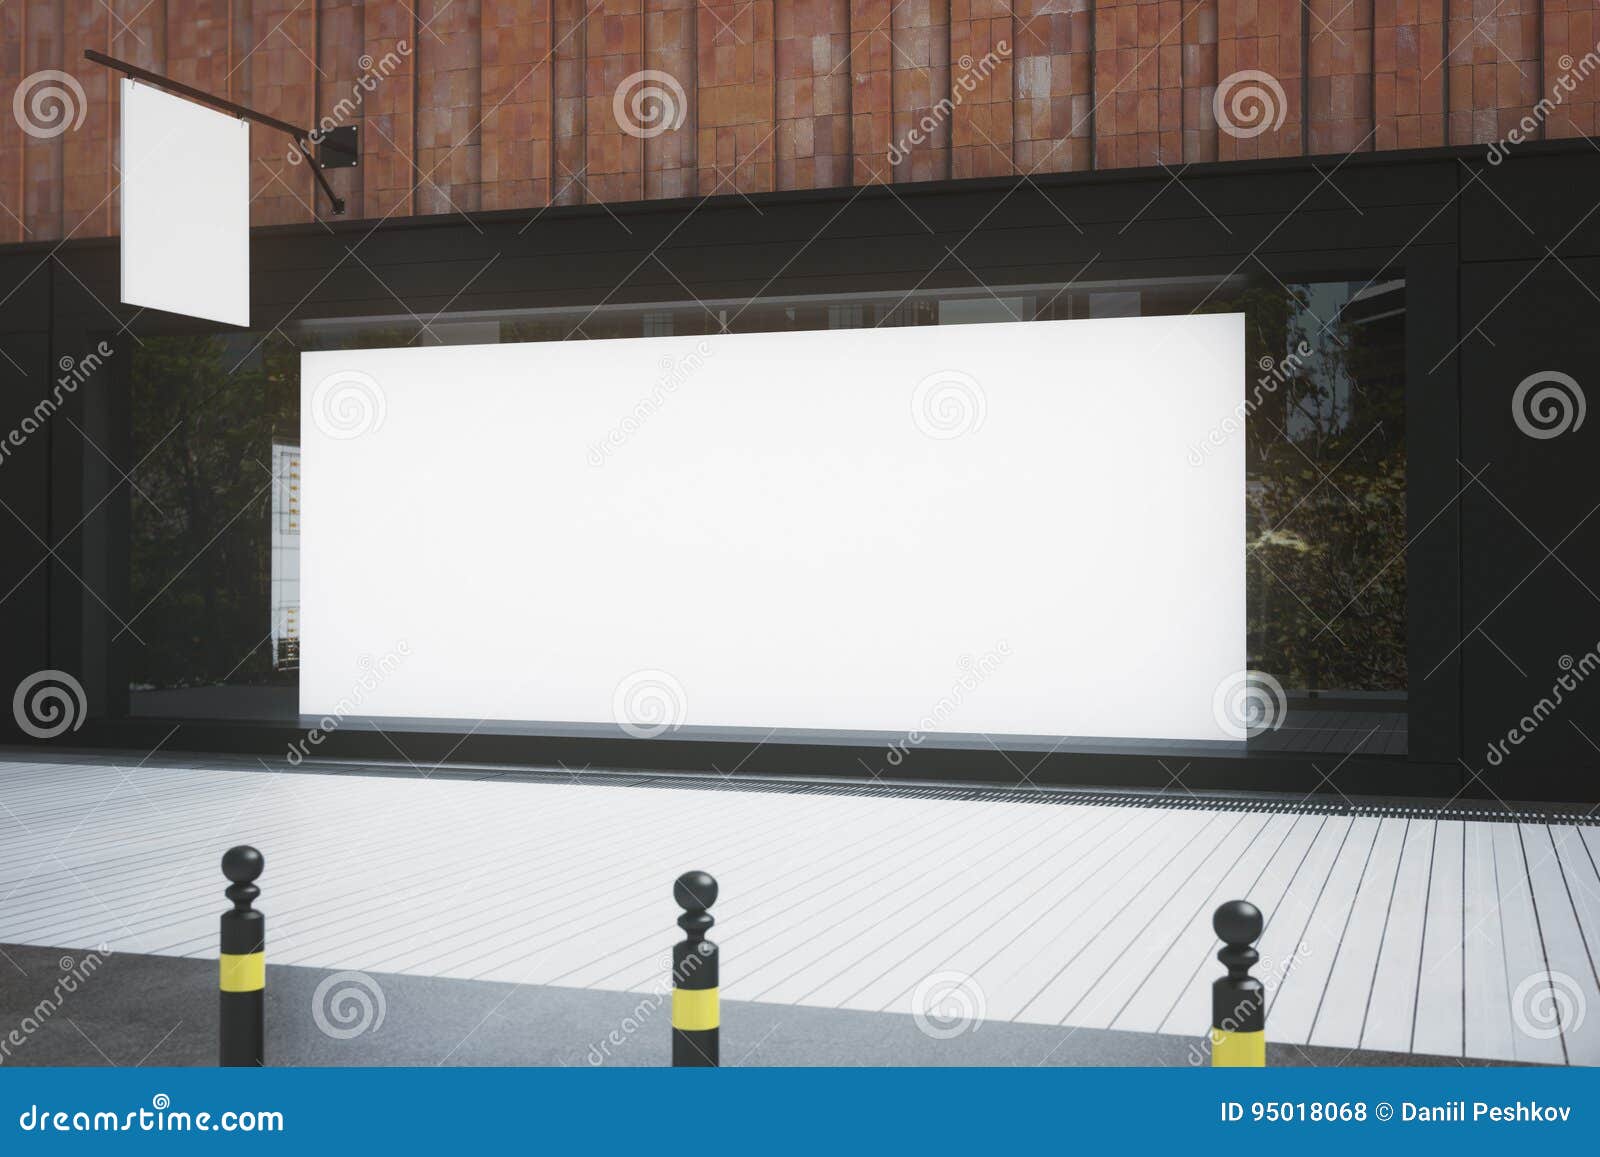 empty vitrine with billboard